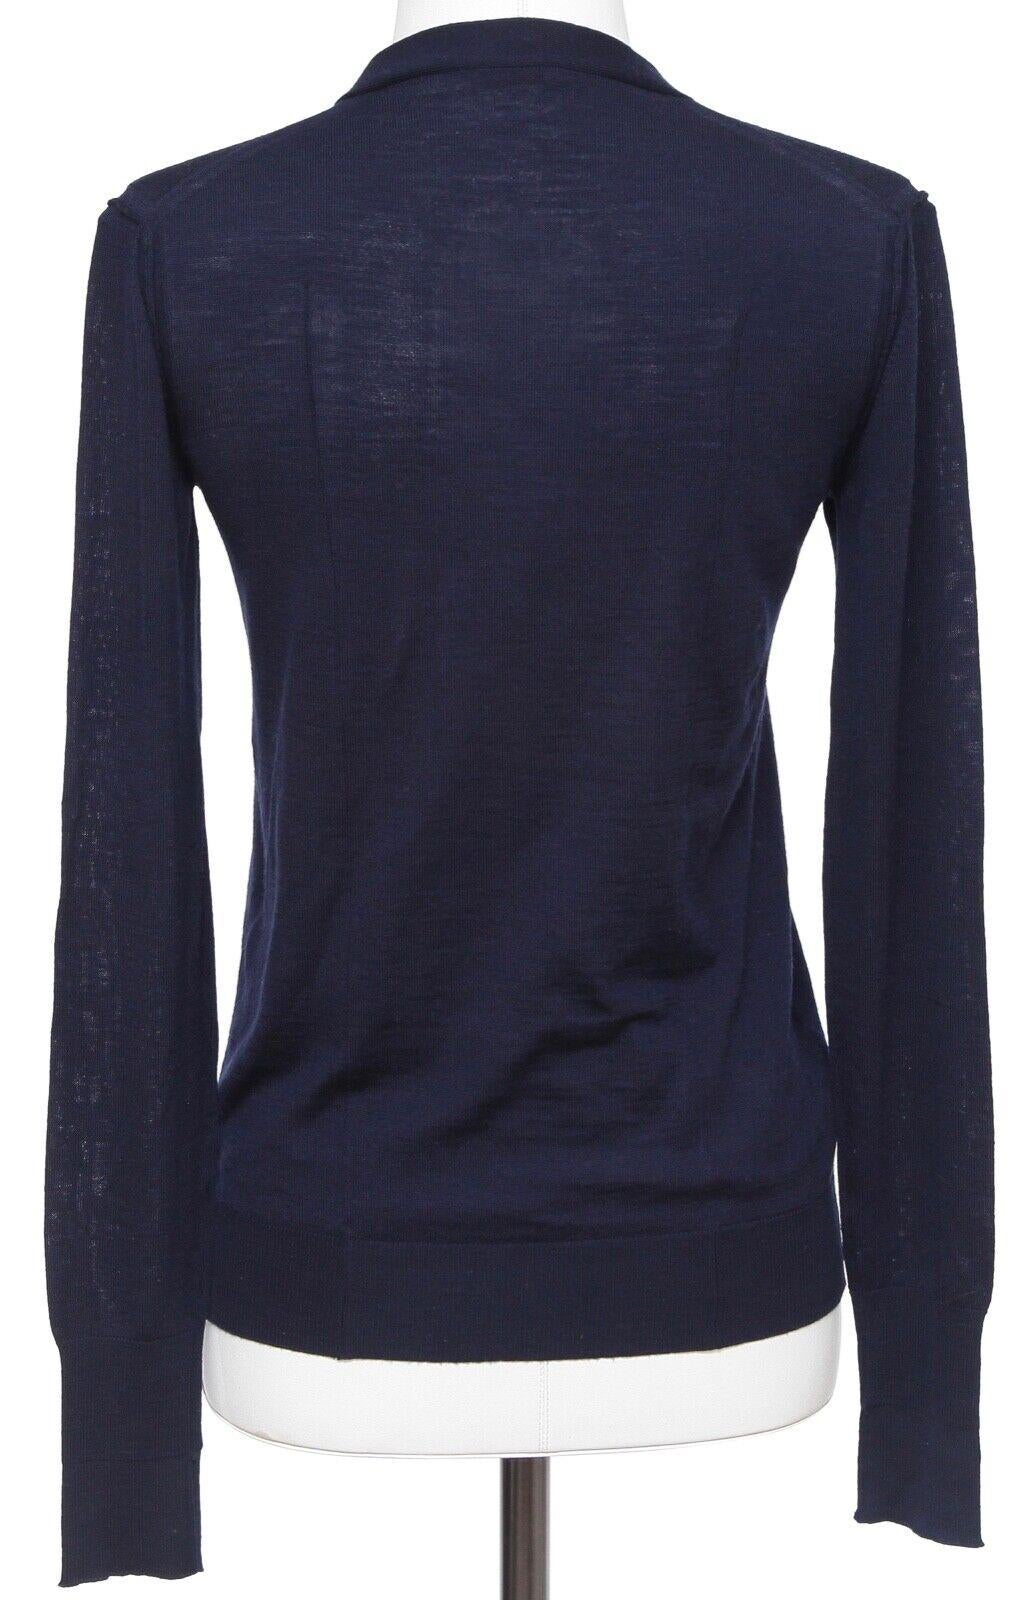 MIU MIU Cardigan Sweater Knit Top Wool Navy Blue V-Neck Long Sleeve Sz 36 1